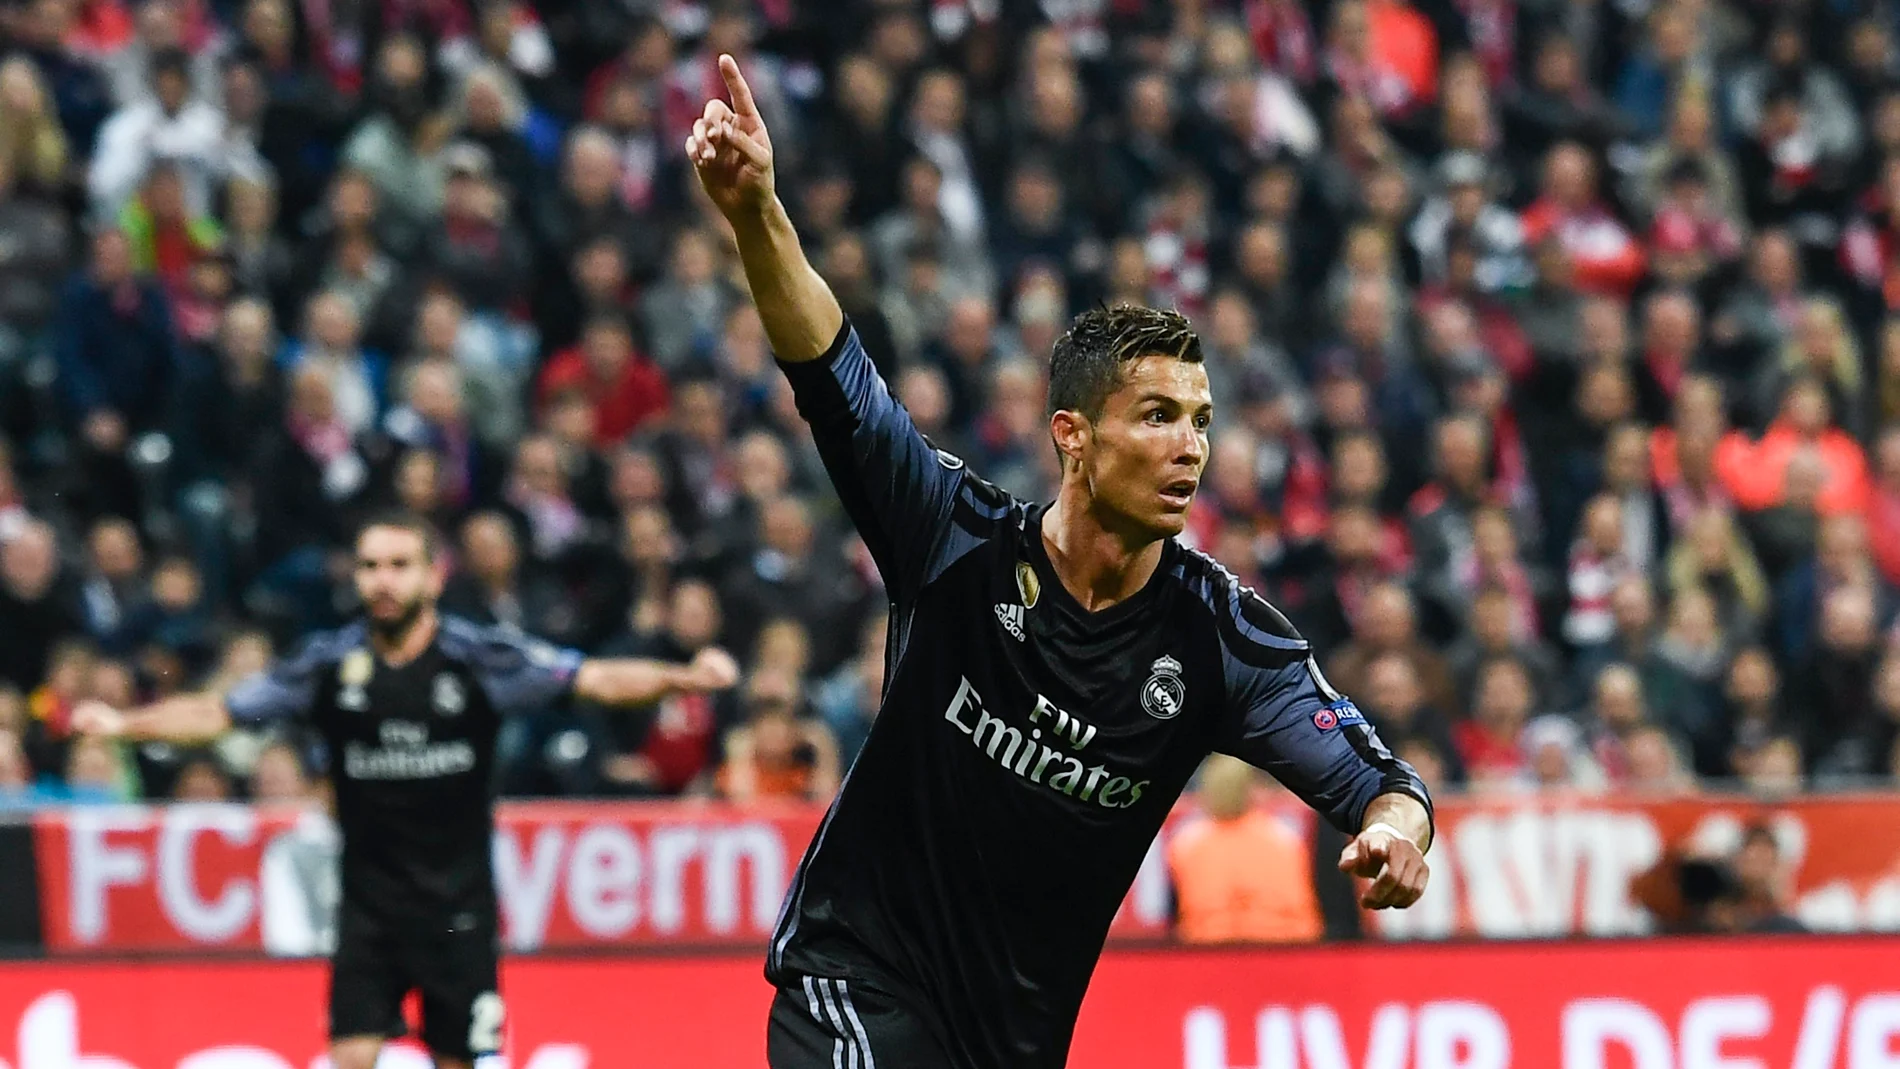 Cristiano Ronaldo celebrando uno de sus goles